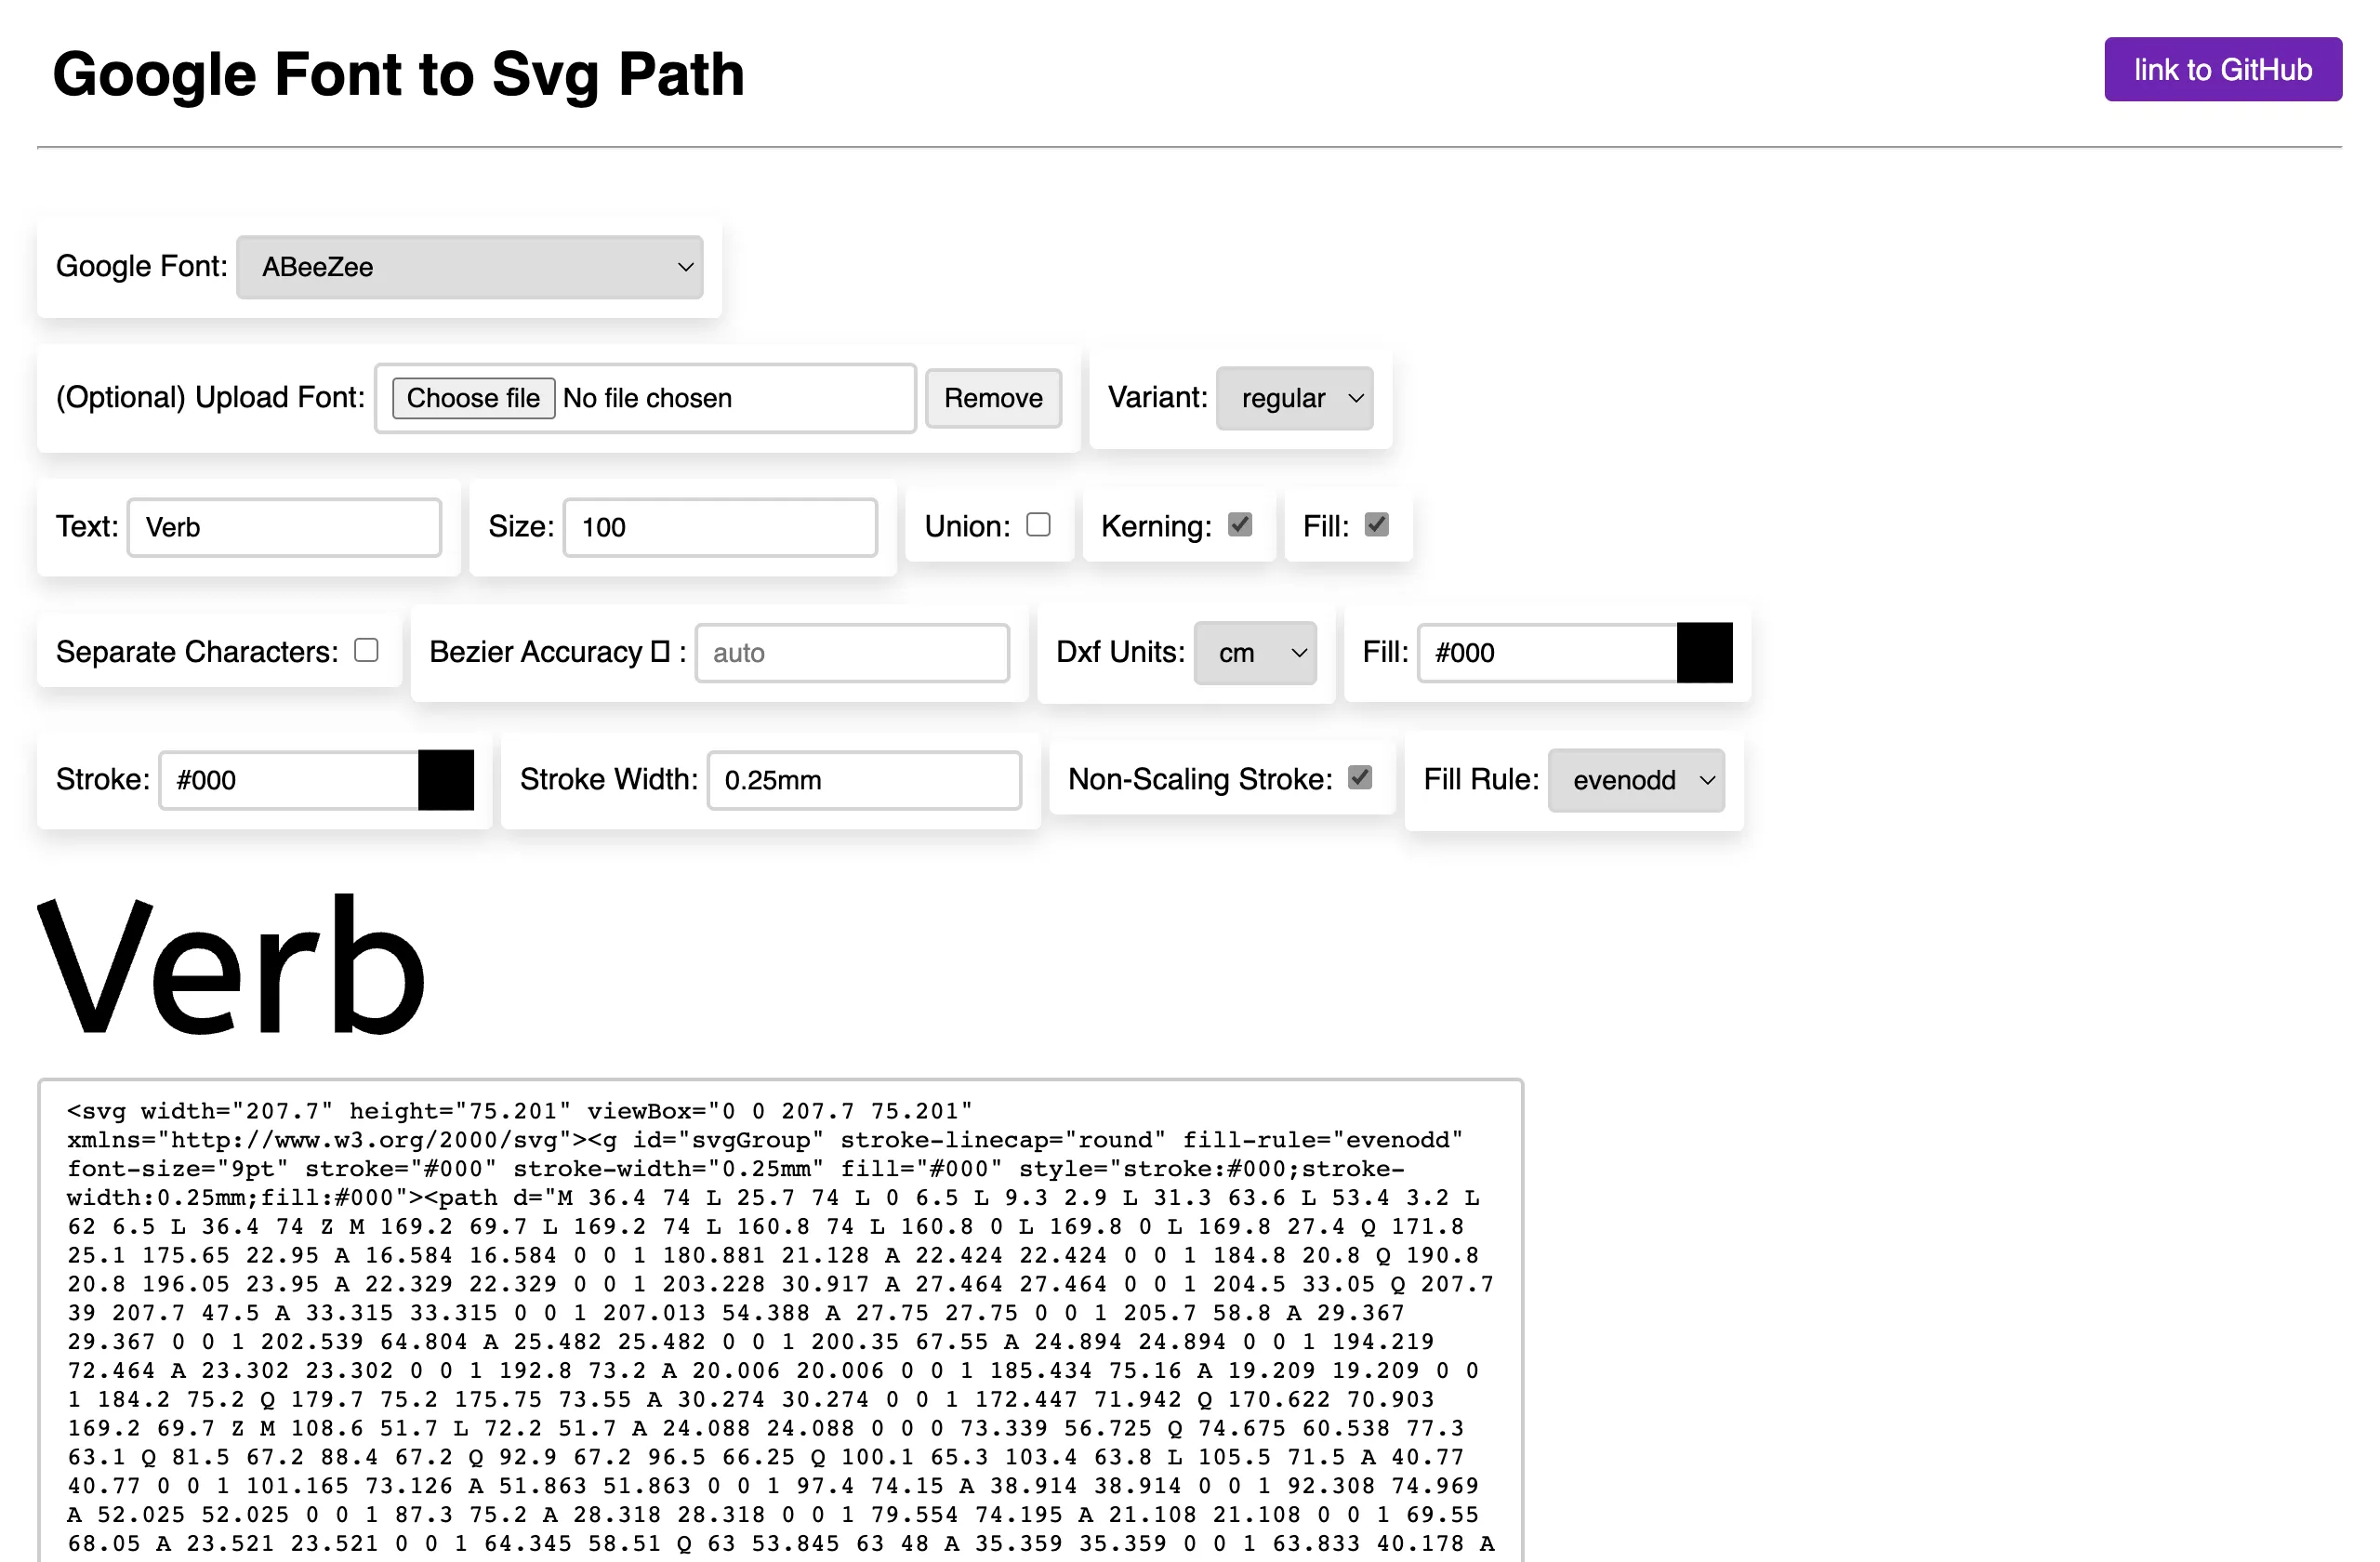 Google font to SVG path